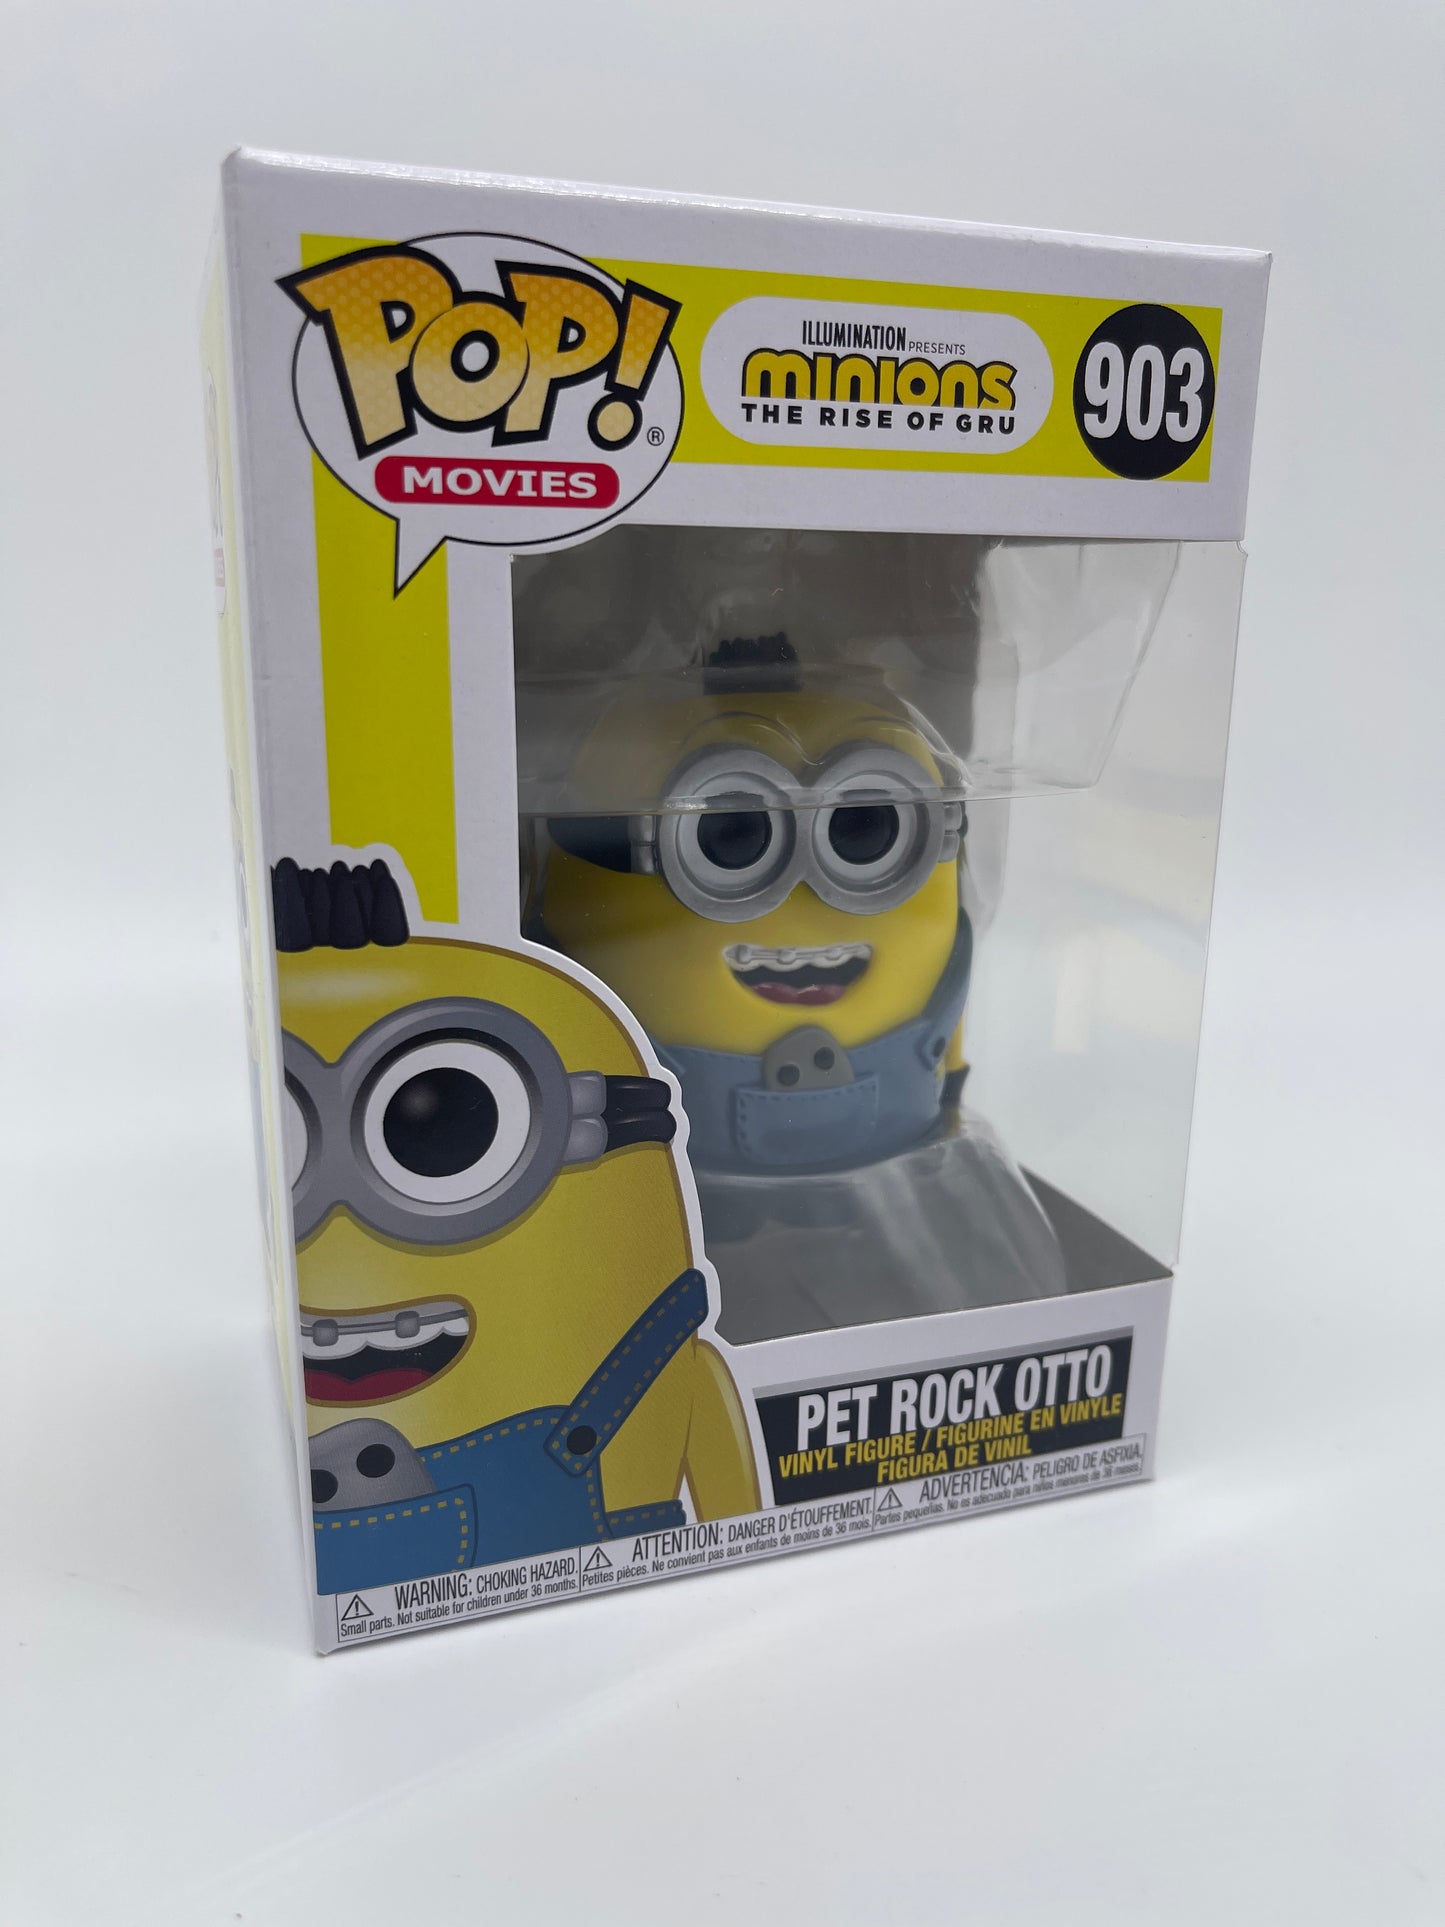 Funko Pop! Movies "Pet Rock Otto" #903 Minions Rise of Gru Universal Studios